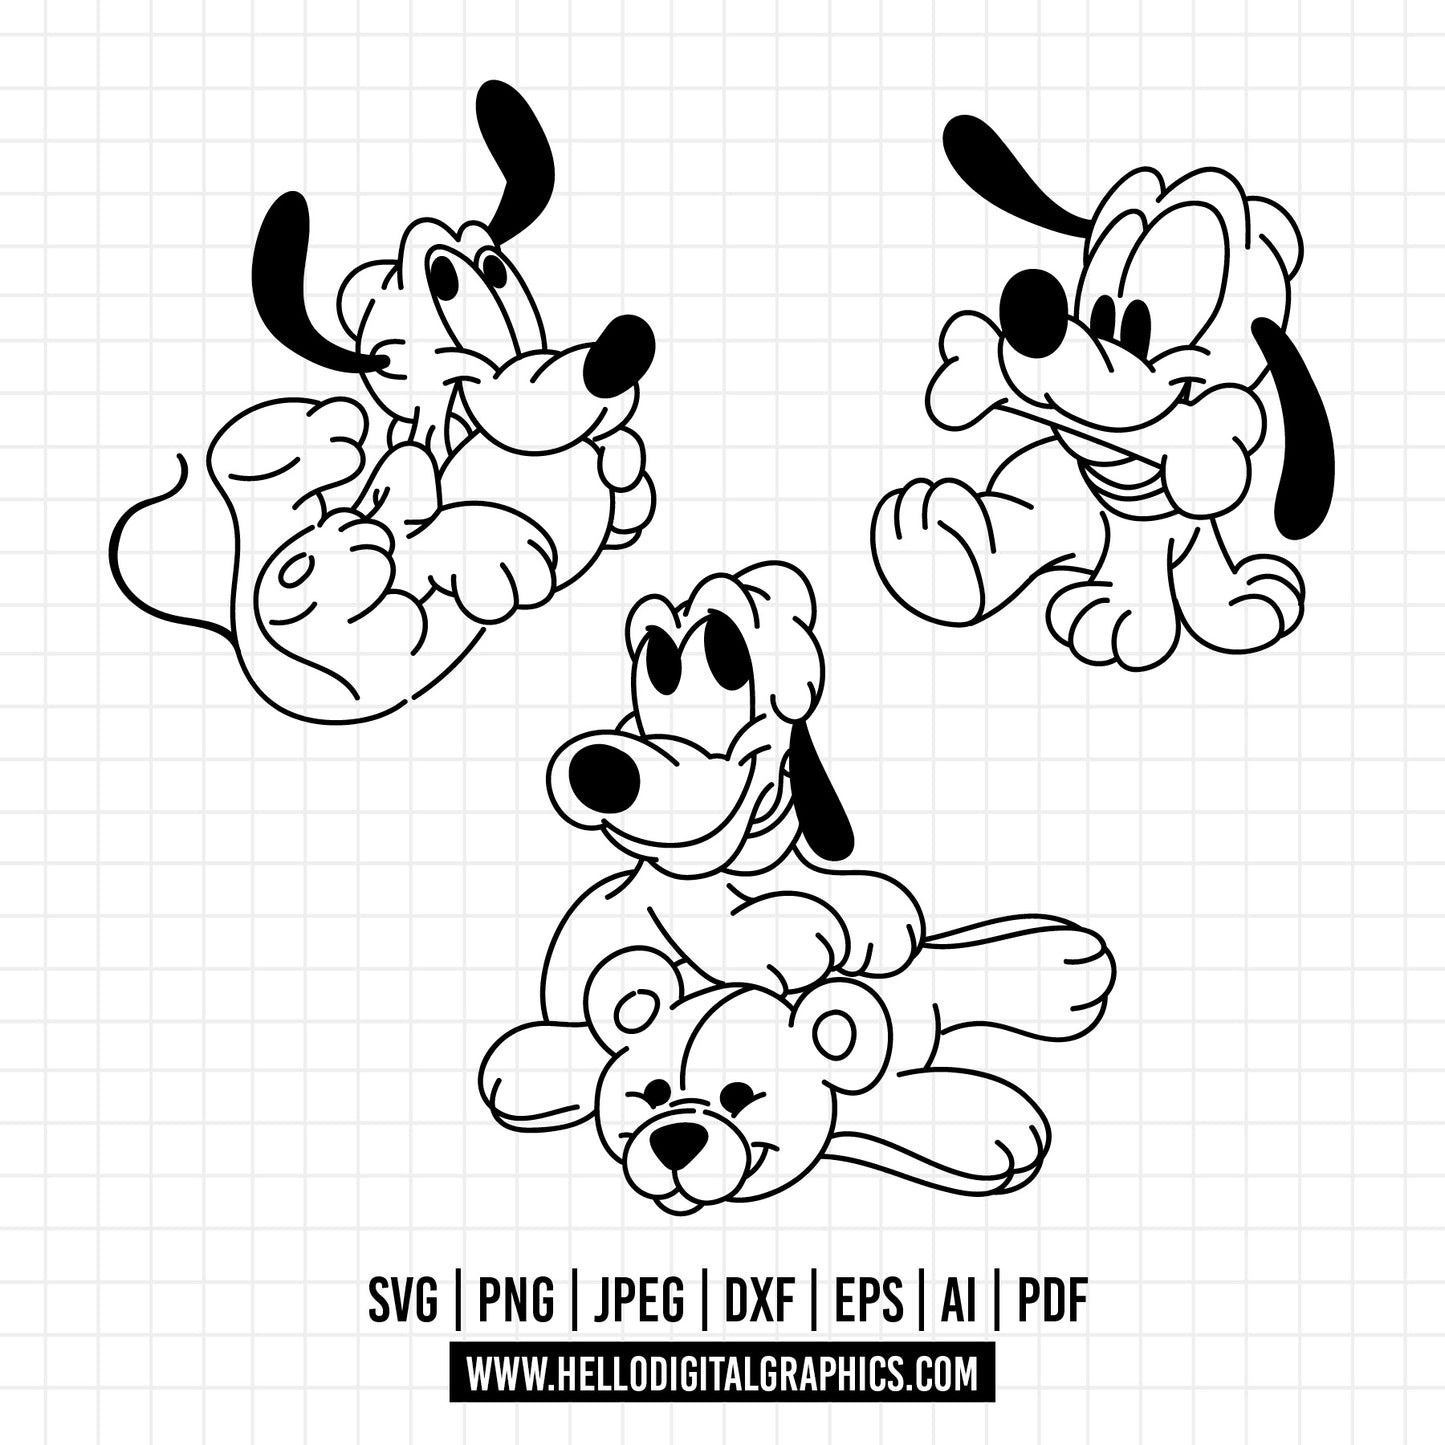 COD1043- Pluto svg, Baby pluto svg, pluto doodle, dog svg, Disney svg